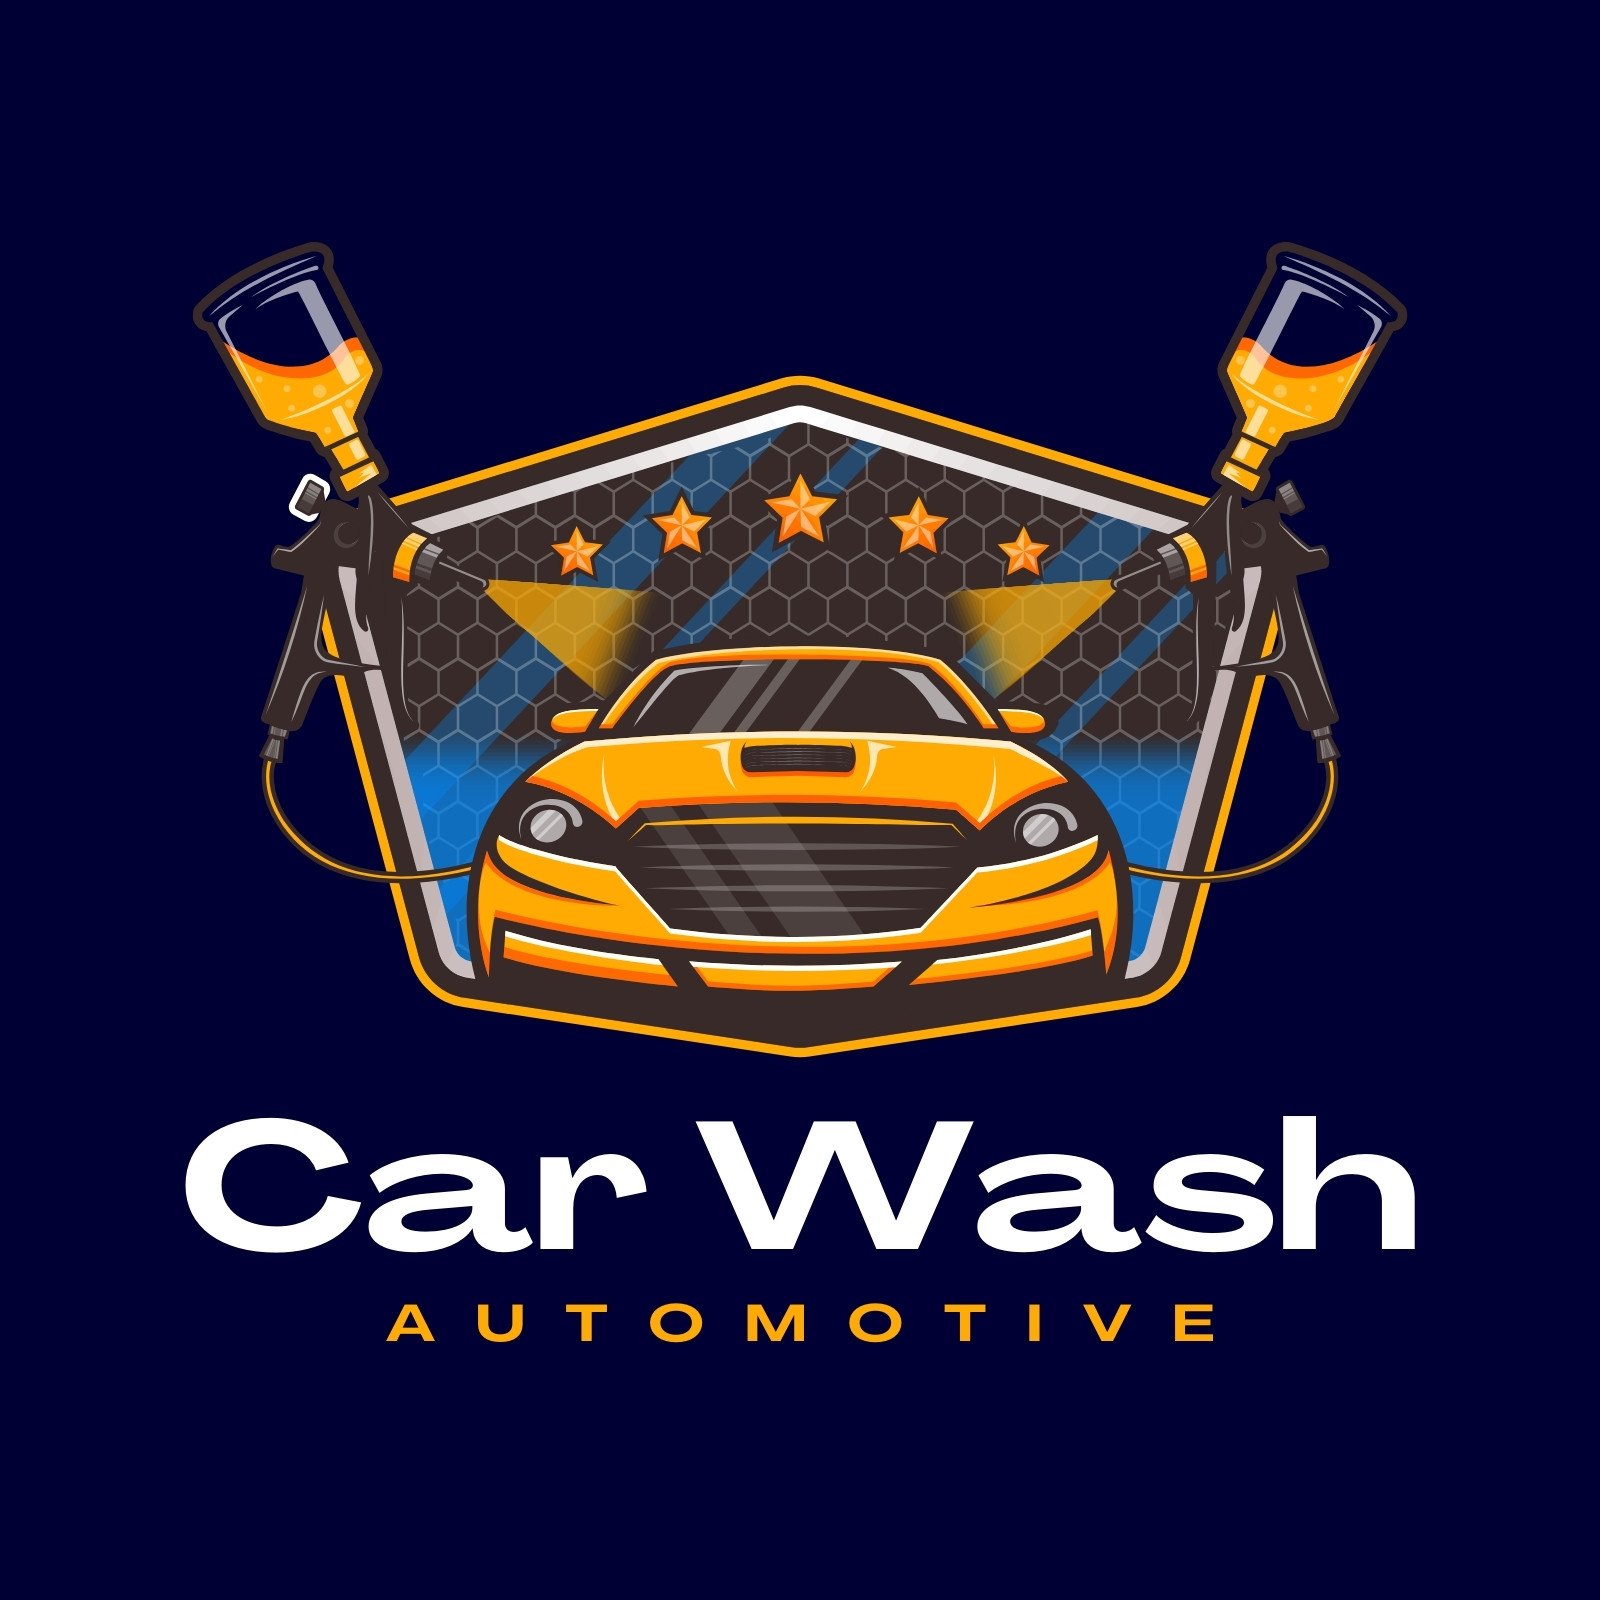 Colorful Modern Illustrative Automotive Car Wash Logo